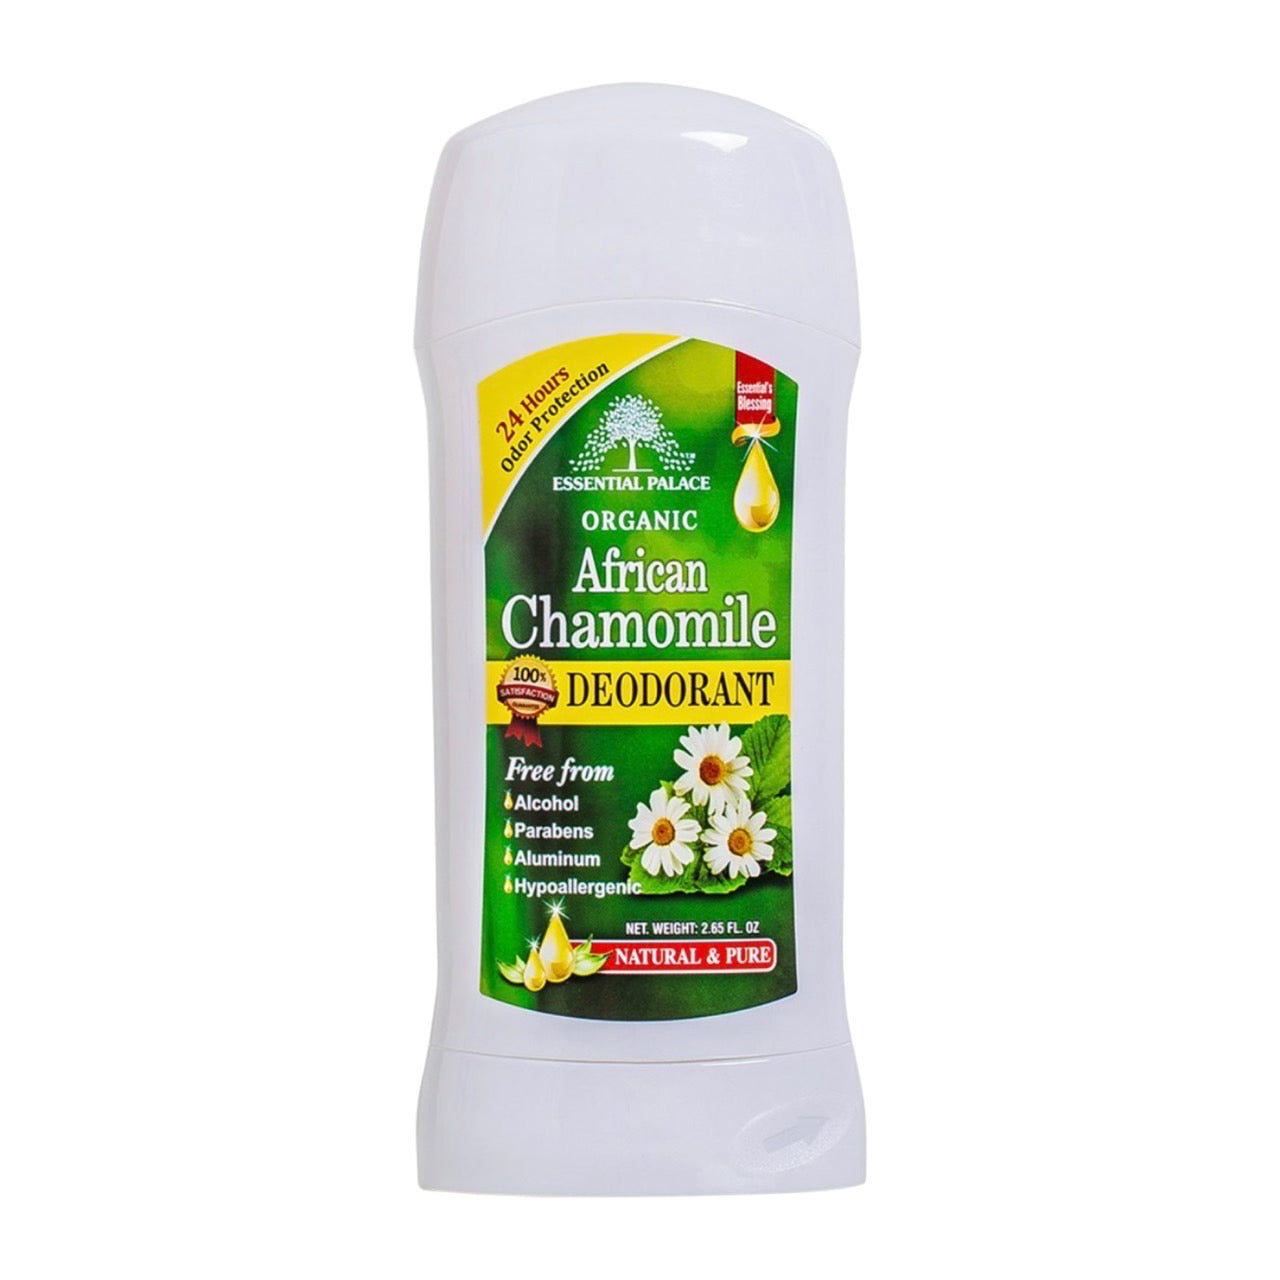 Deodorant - African Chamomile